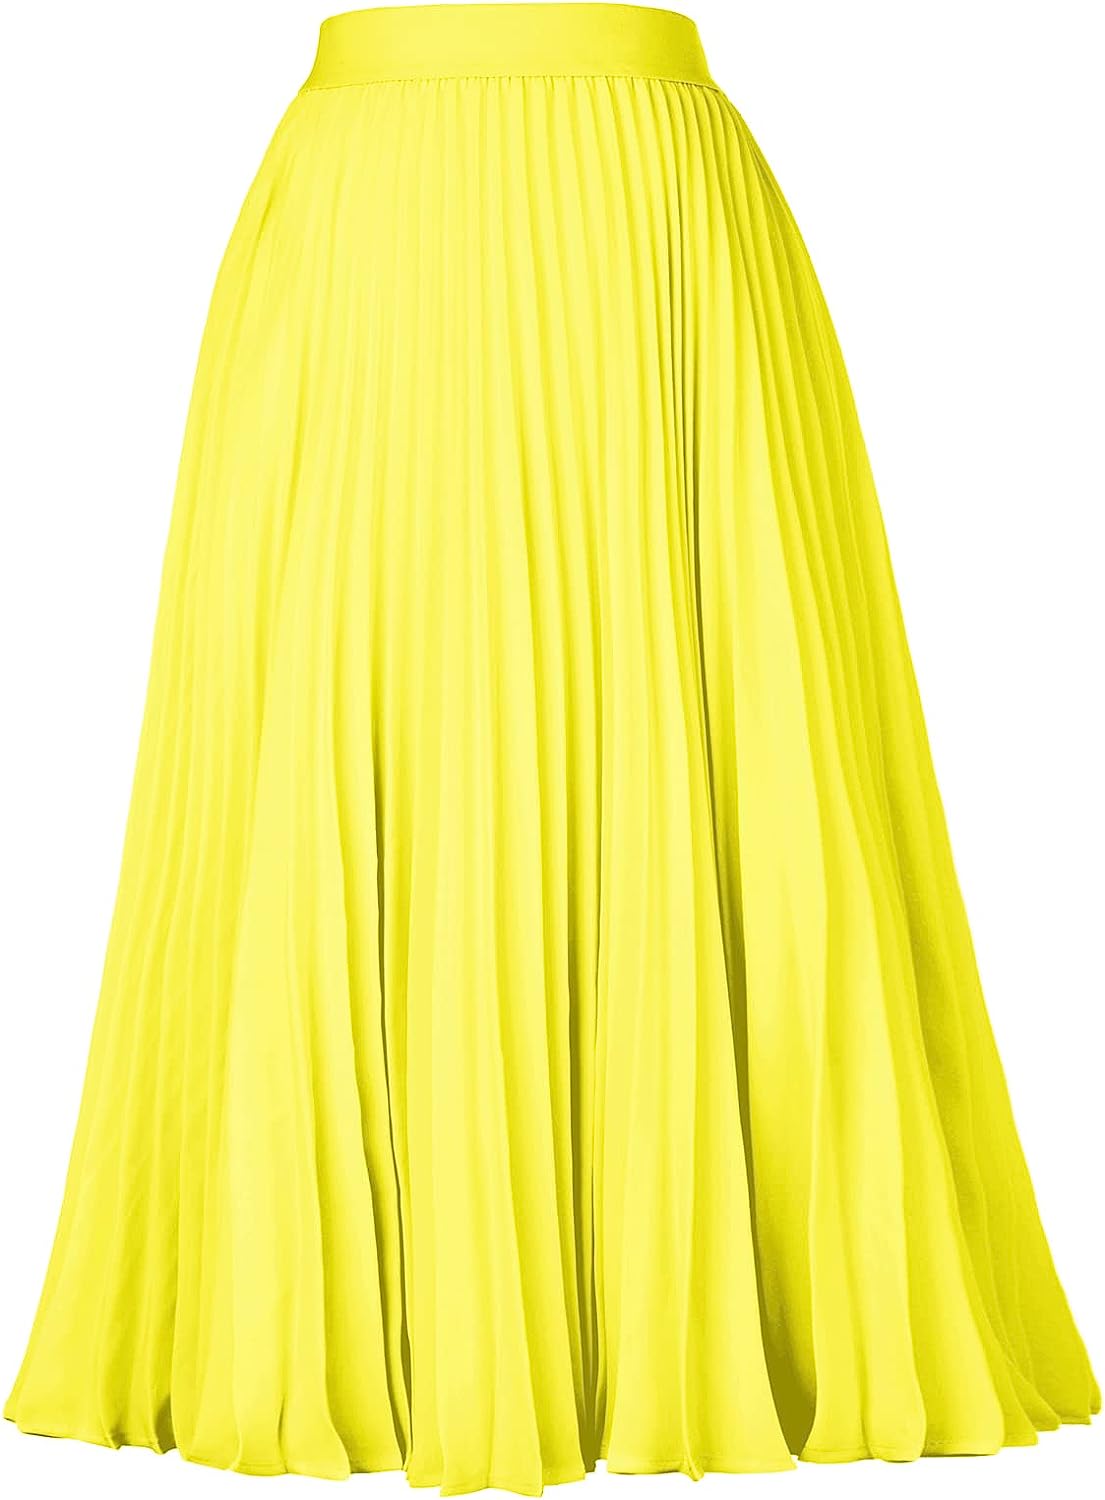 Women's Yellow High Waist Long Chiffon Skirt Yellow Chiffon Maxi